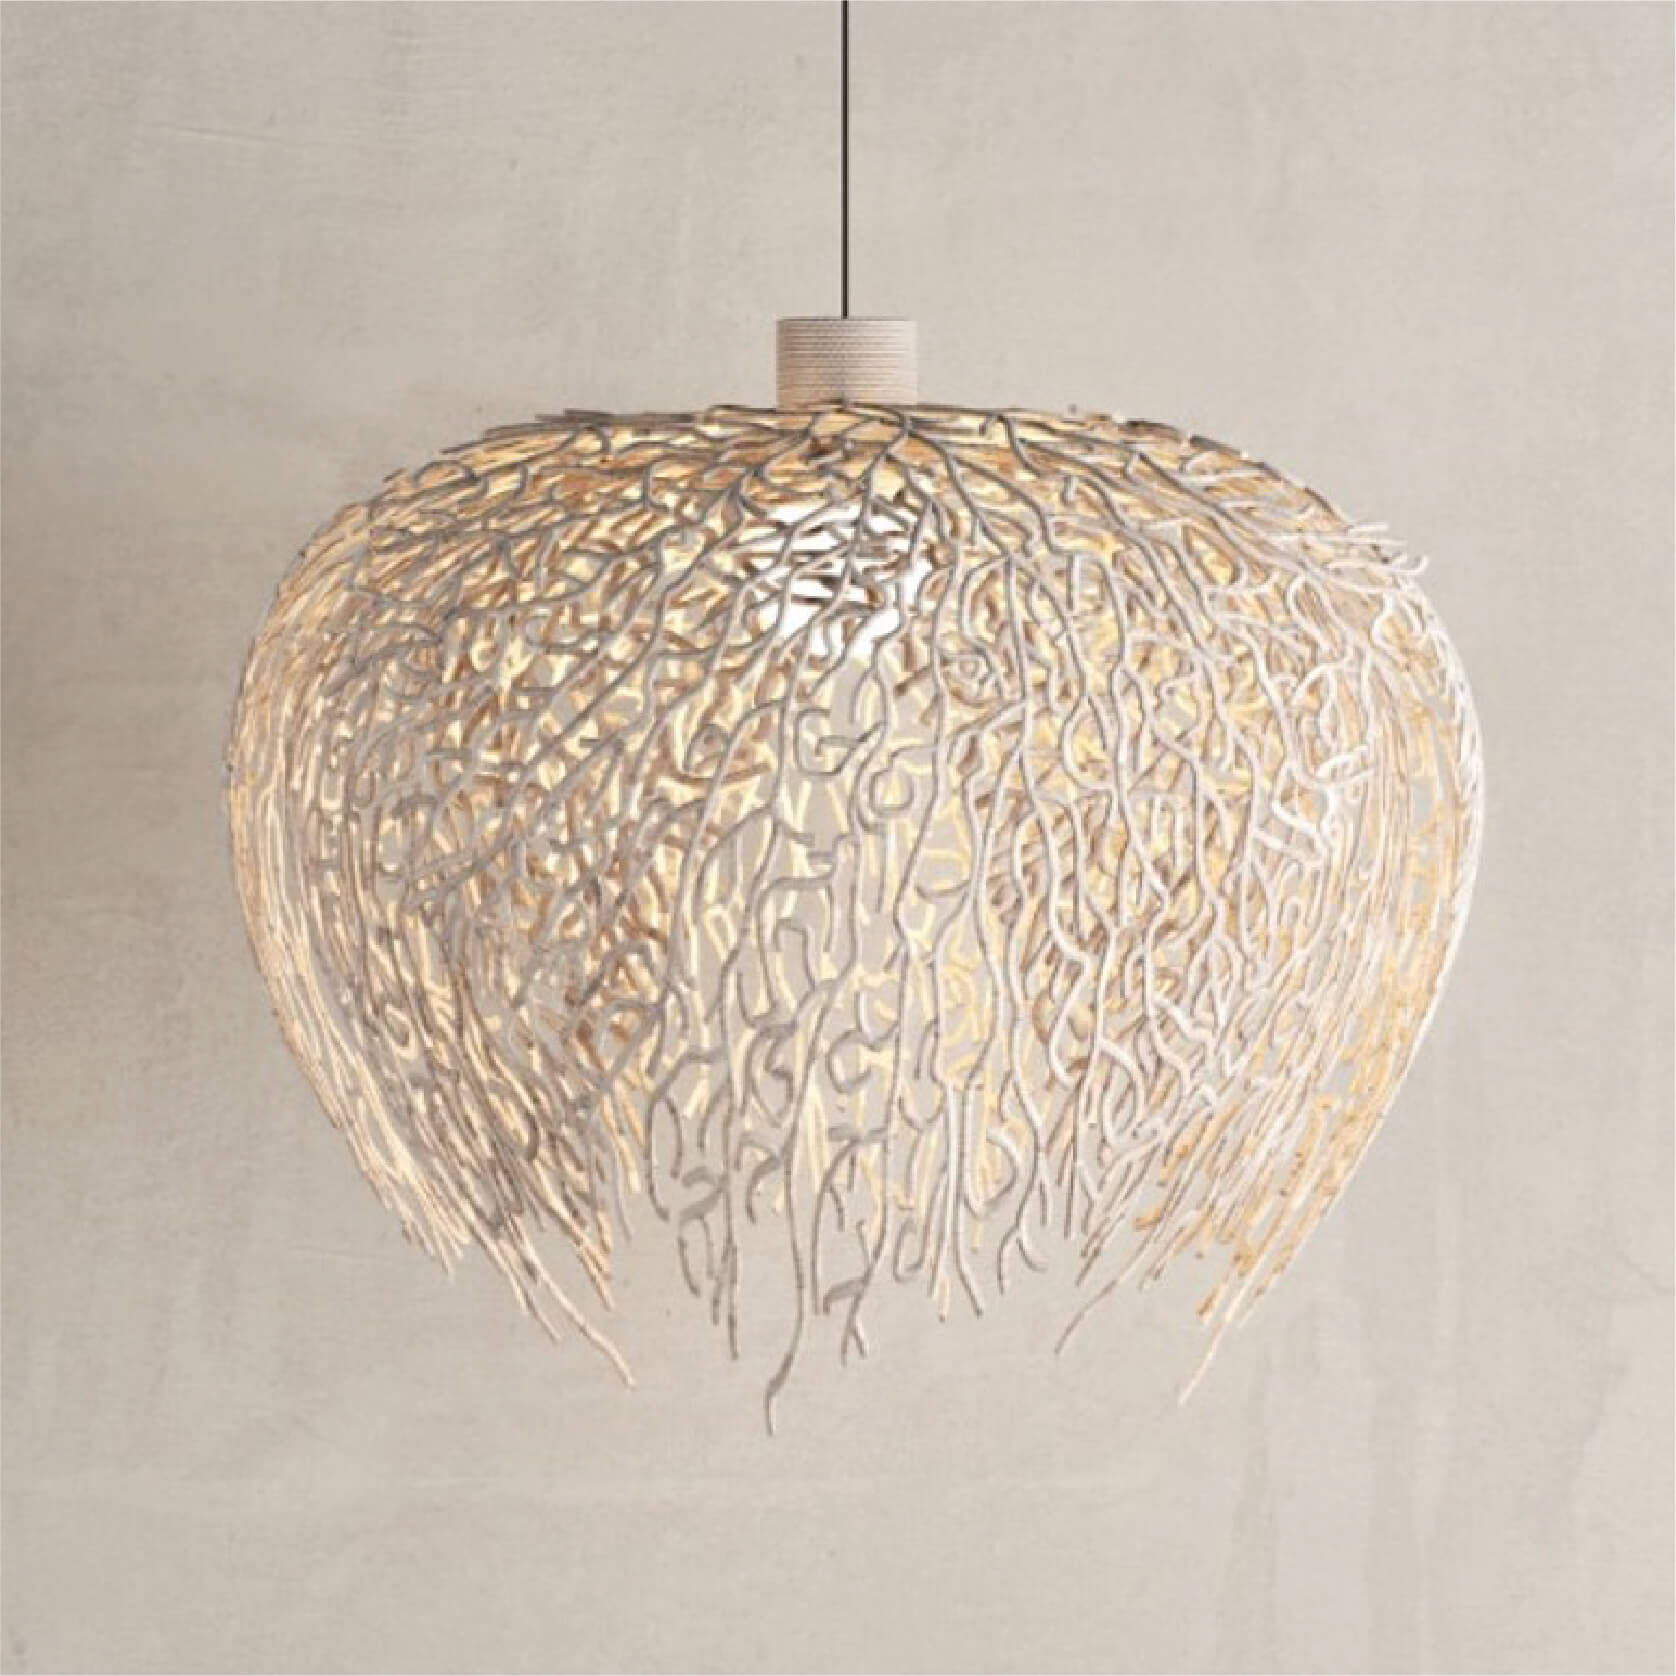 Fan Coral Pendant Lamp by Tadeco Home - Design Commune Feature